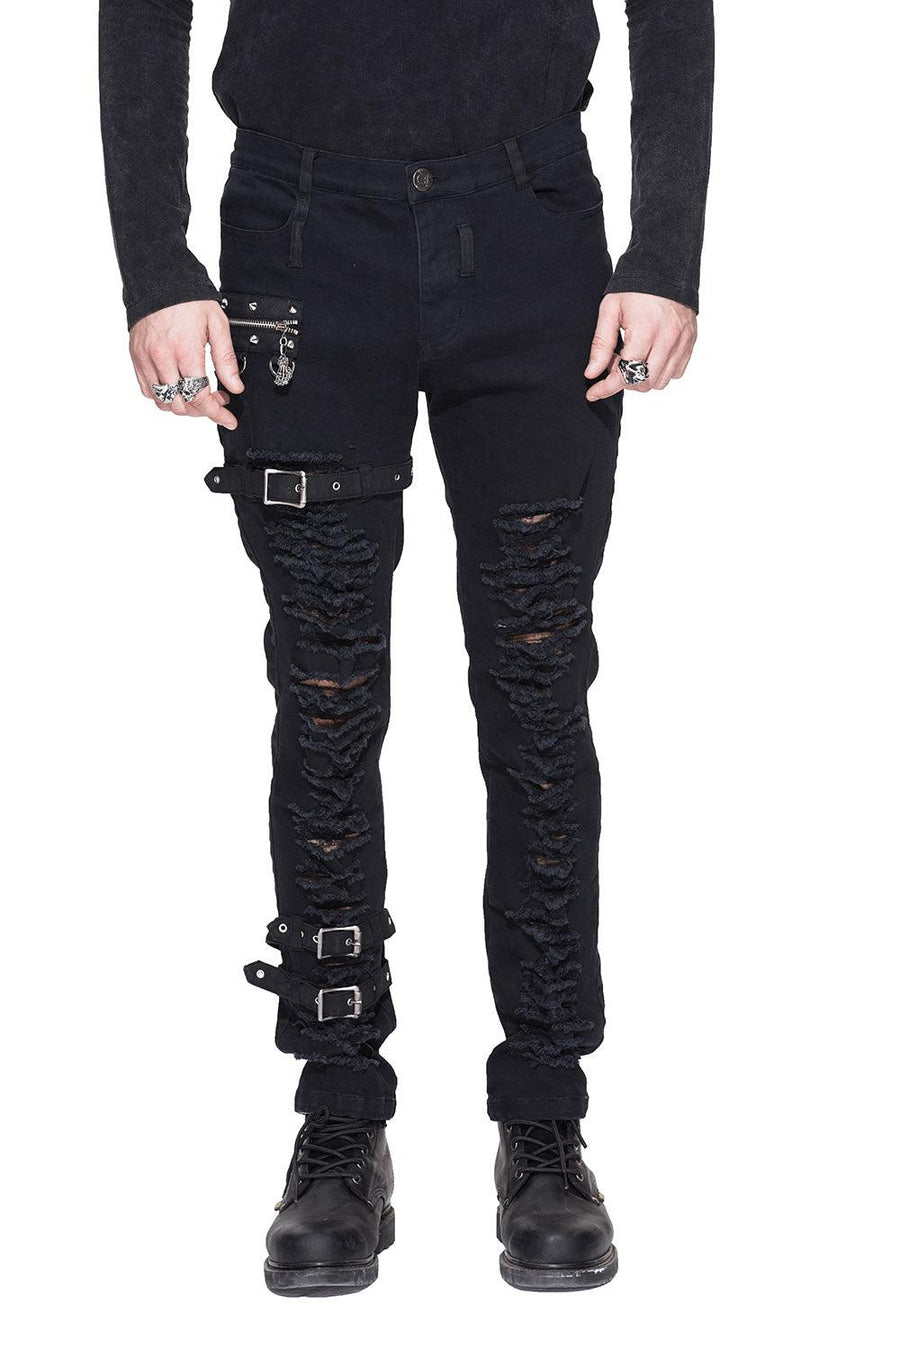 Devil Fashion Black Death Pants - VampireFreaks